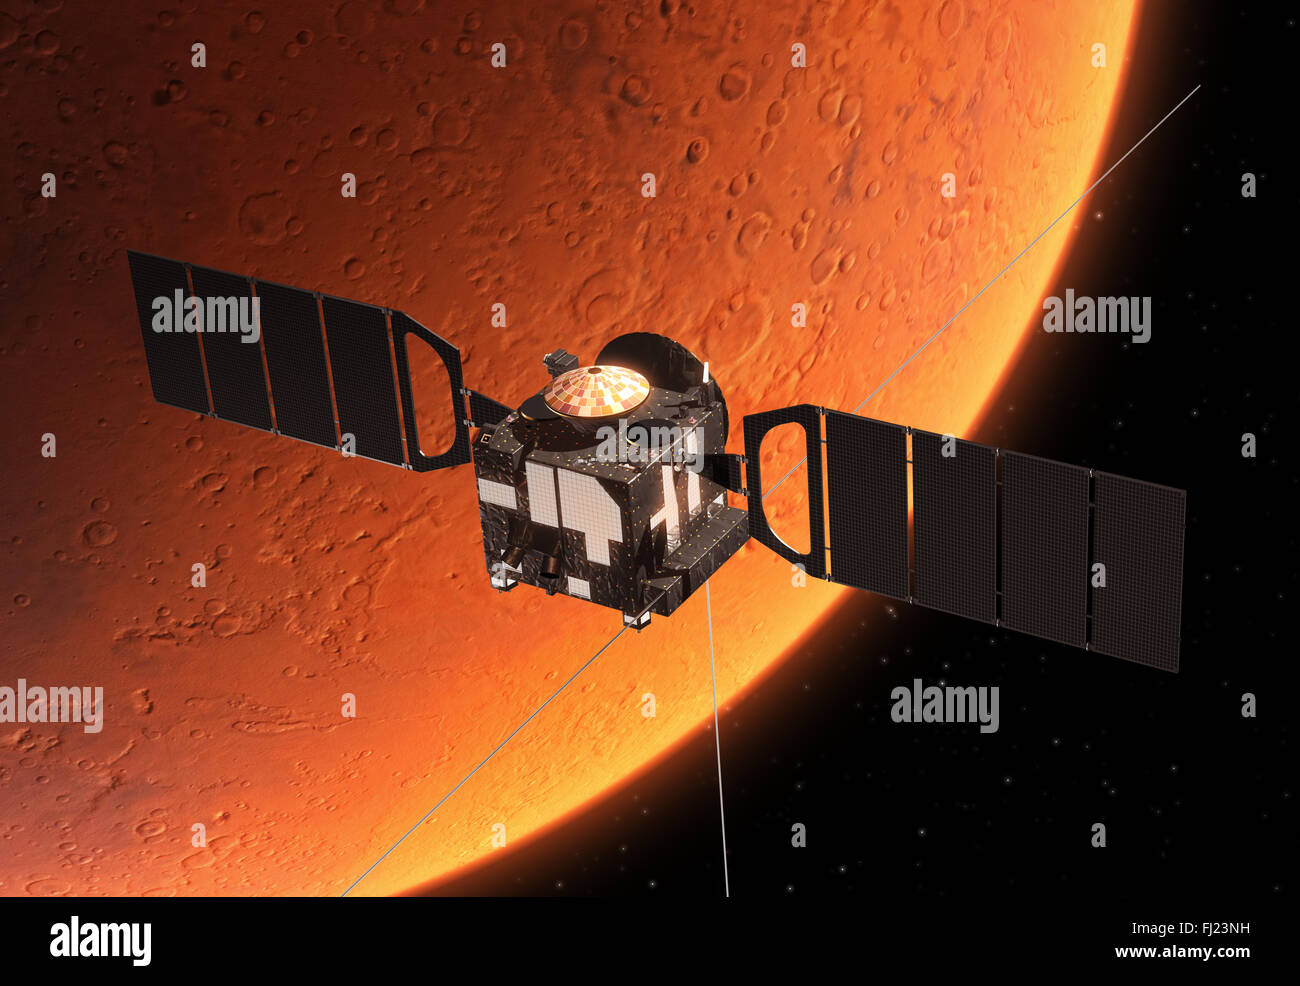 Interplanetary Space Station Orbiting Planet Mars Stock Photo Alamy